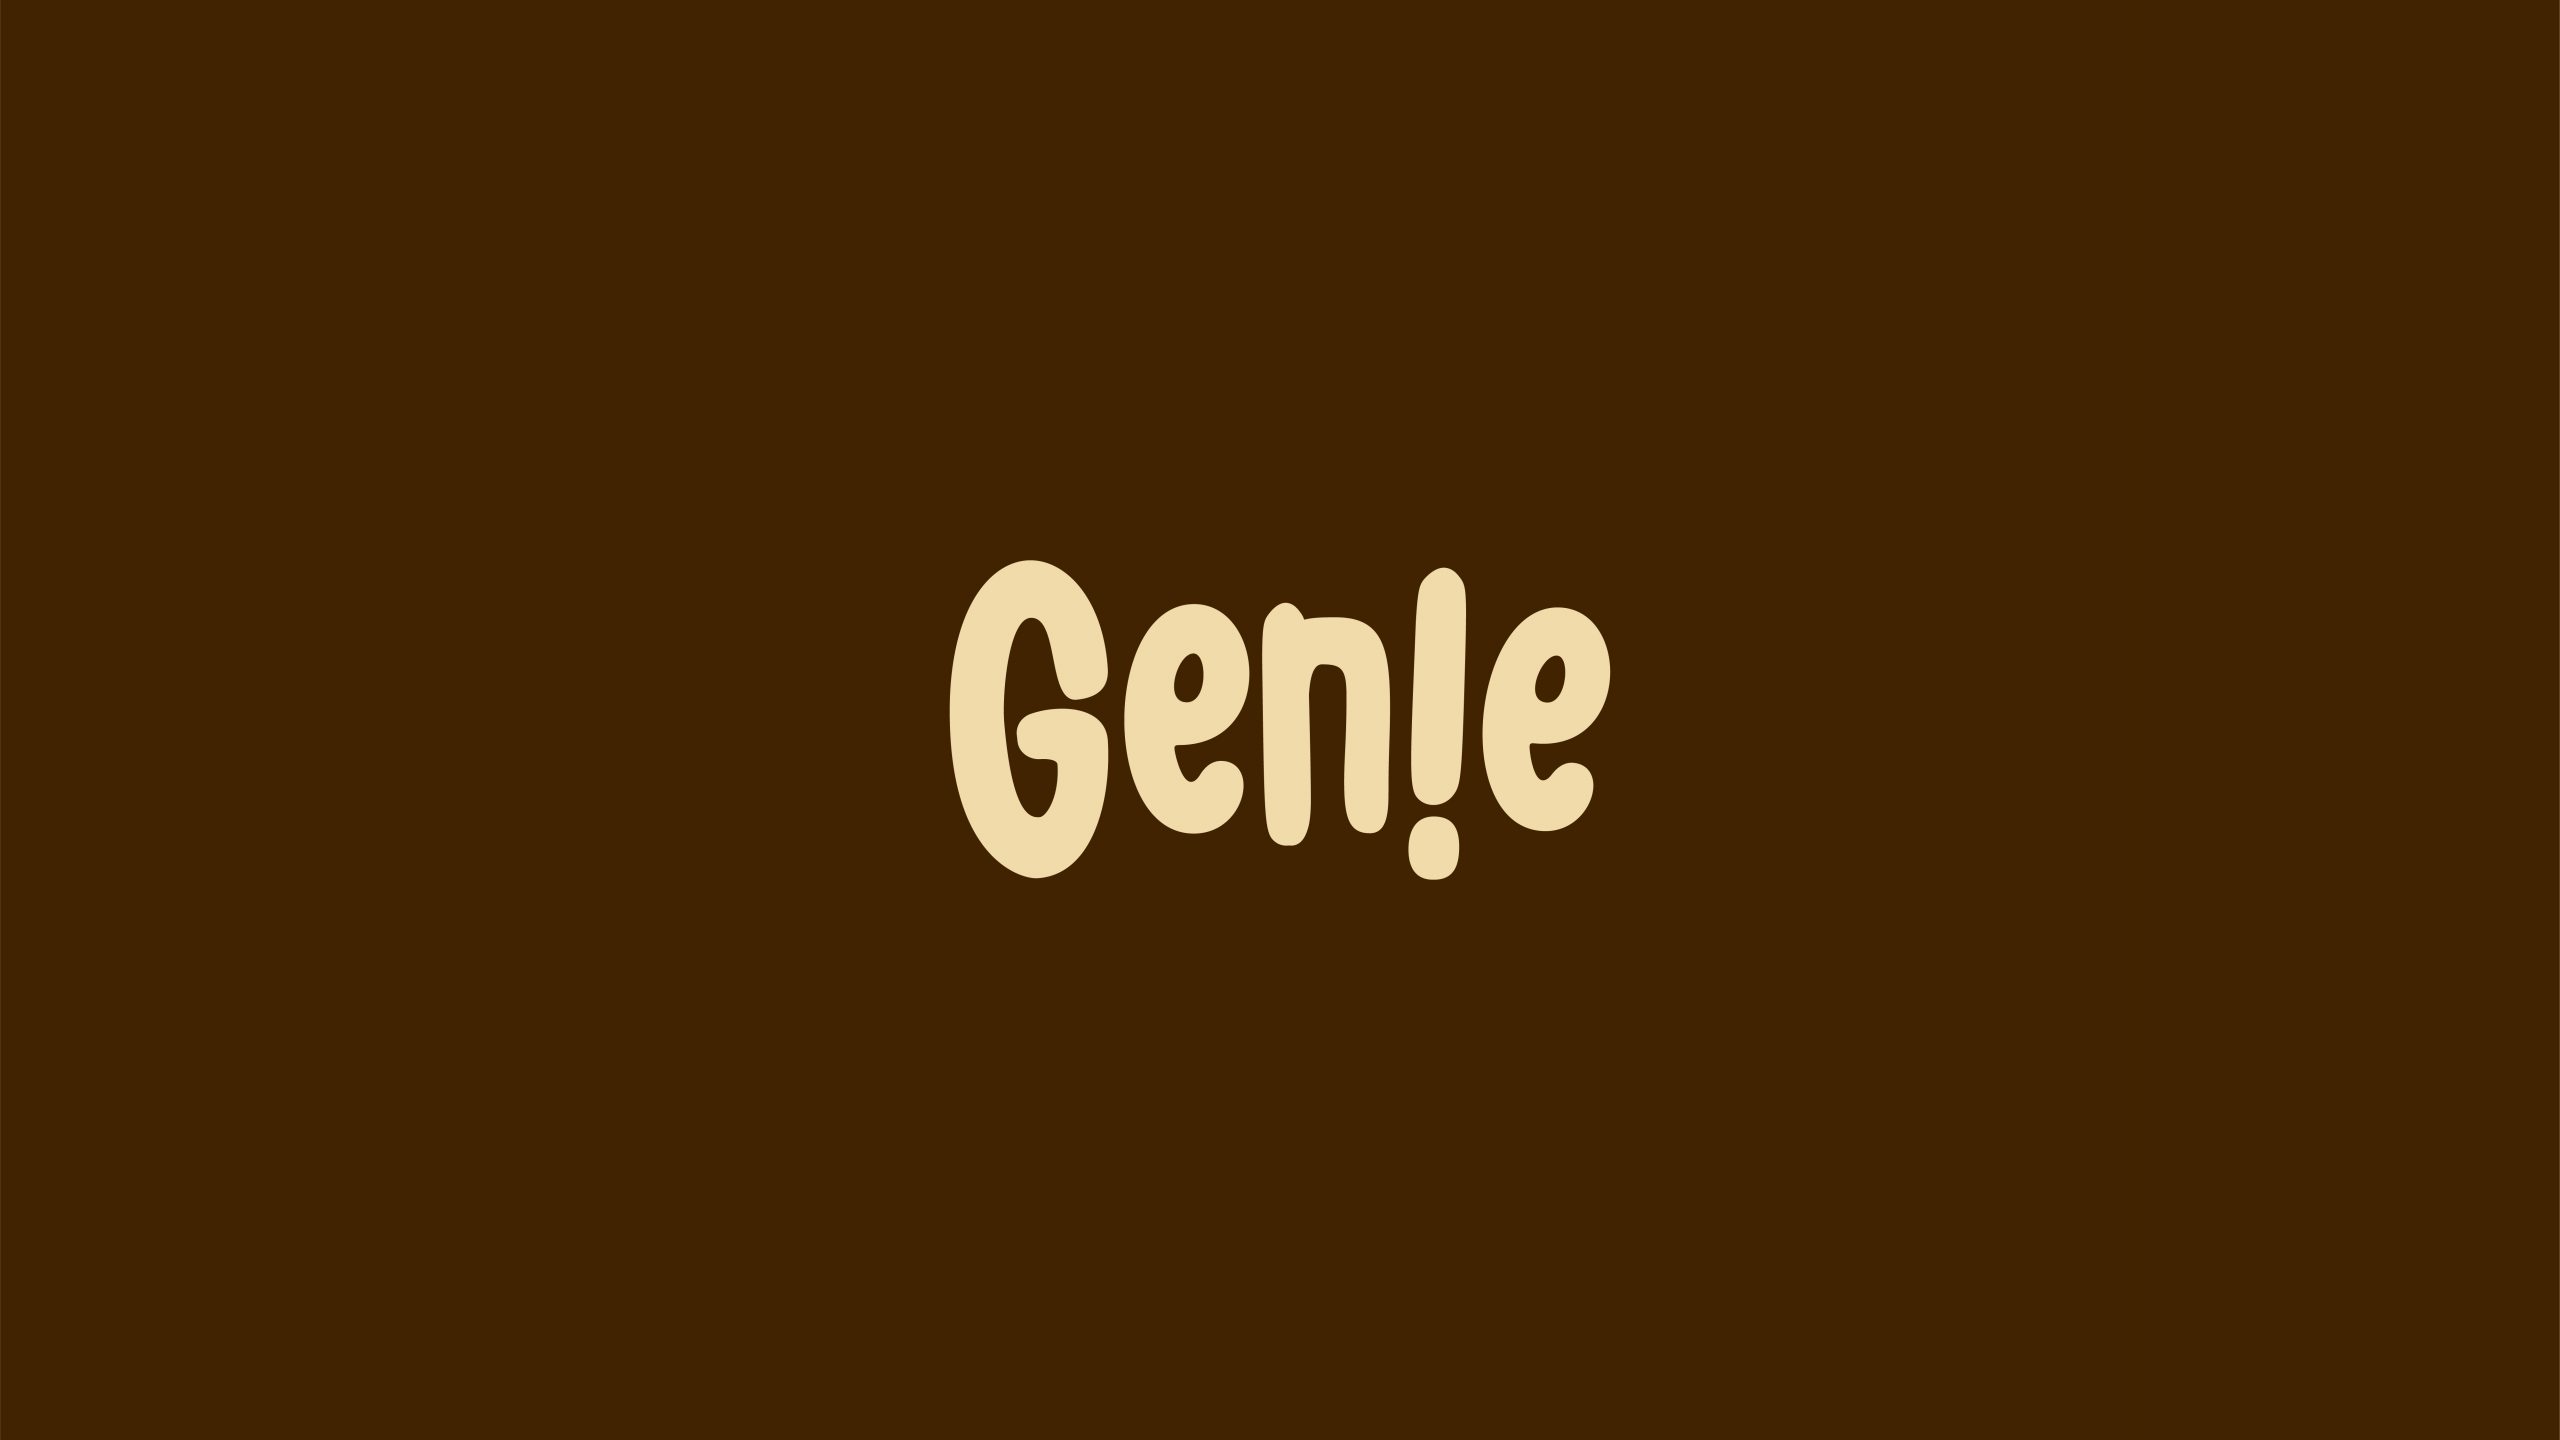 01_EXP_Genie_MB_Presentation-02